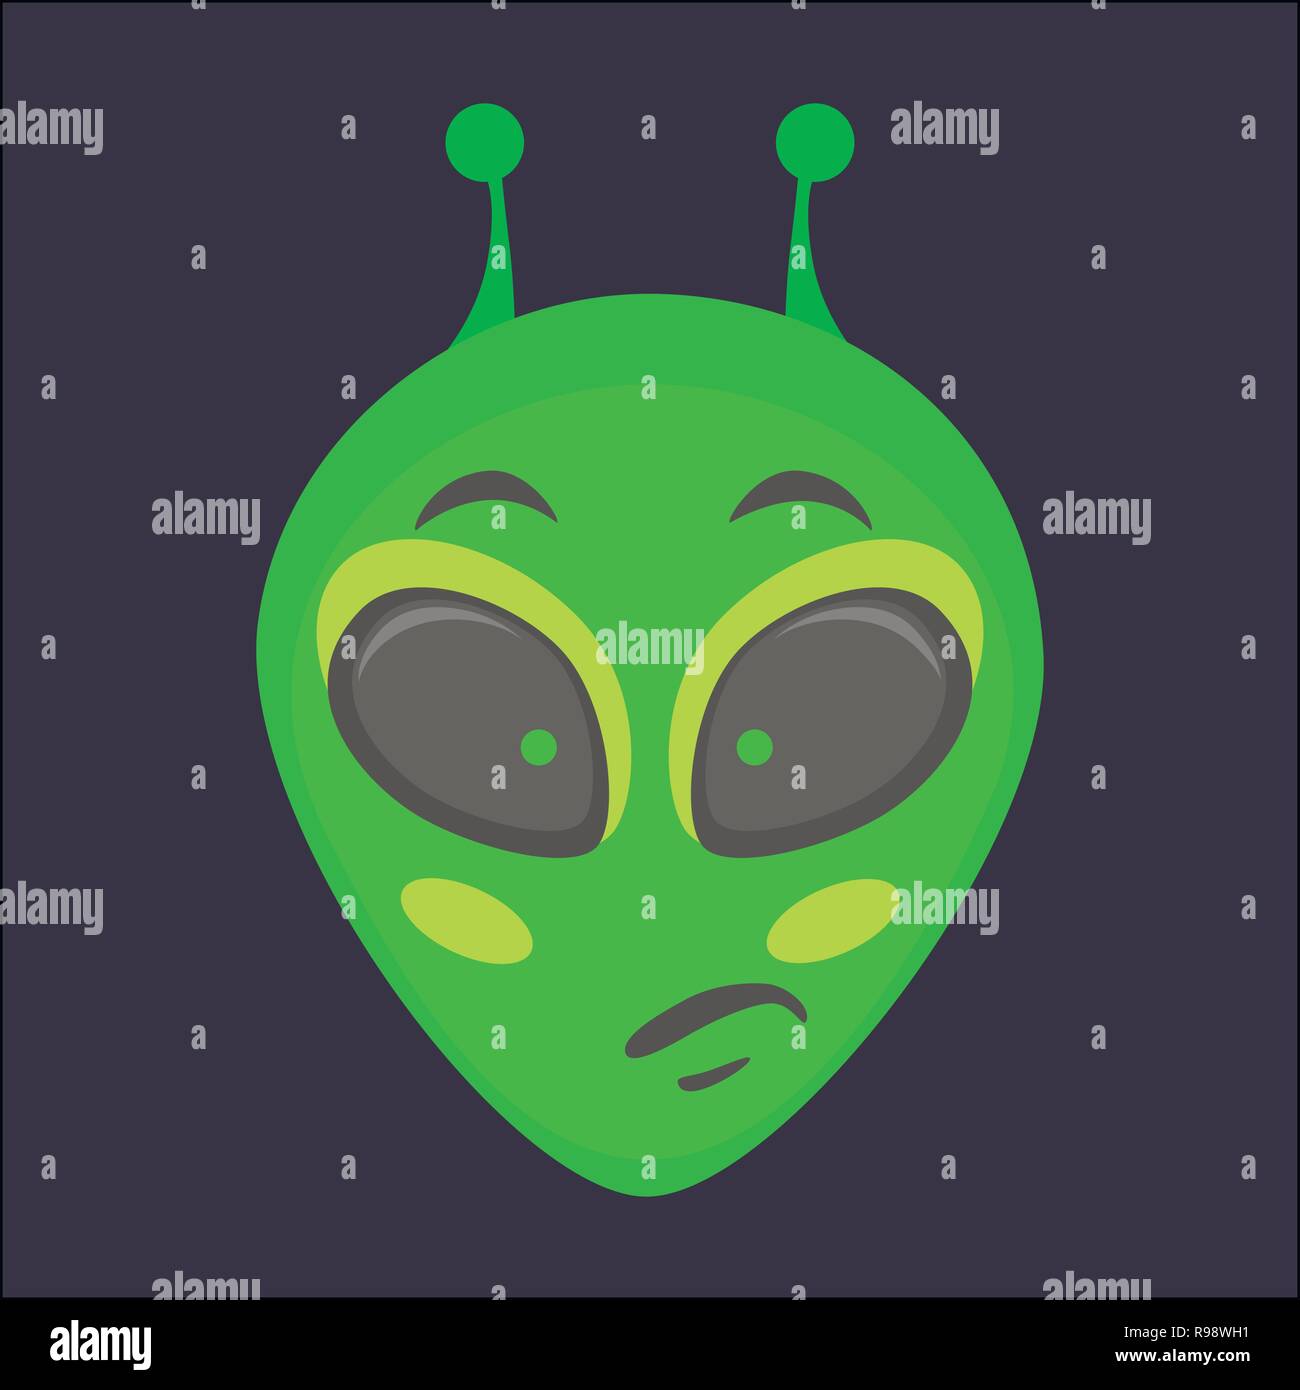 Alien Head Alien Face Emoji Humanoid Icon Vector Illustration Stock Vector Image And Art Alamy 